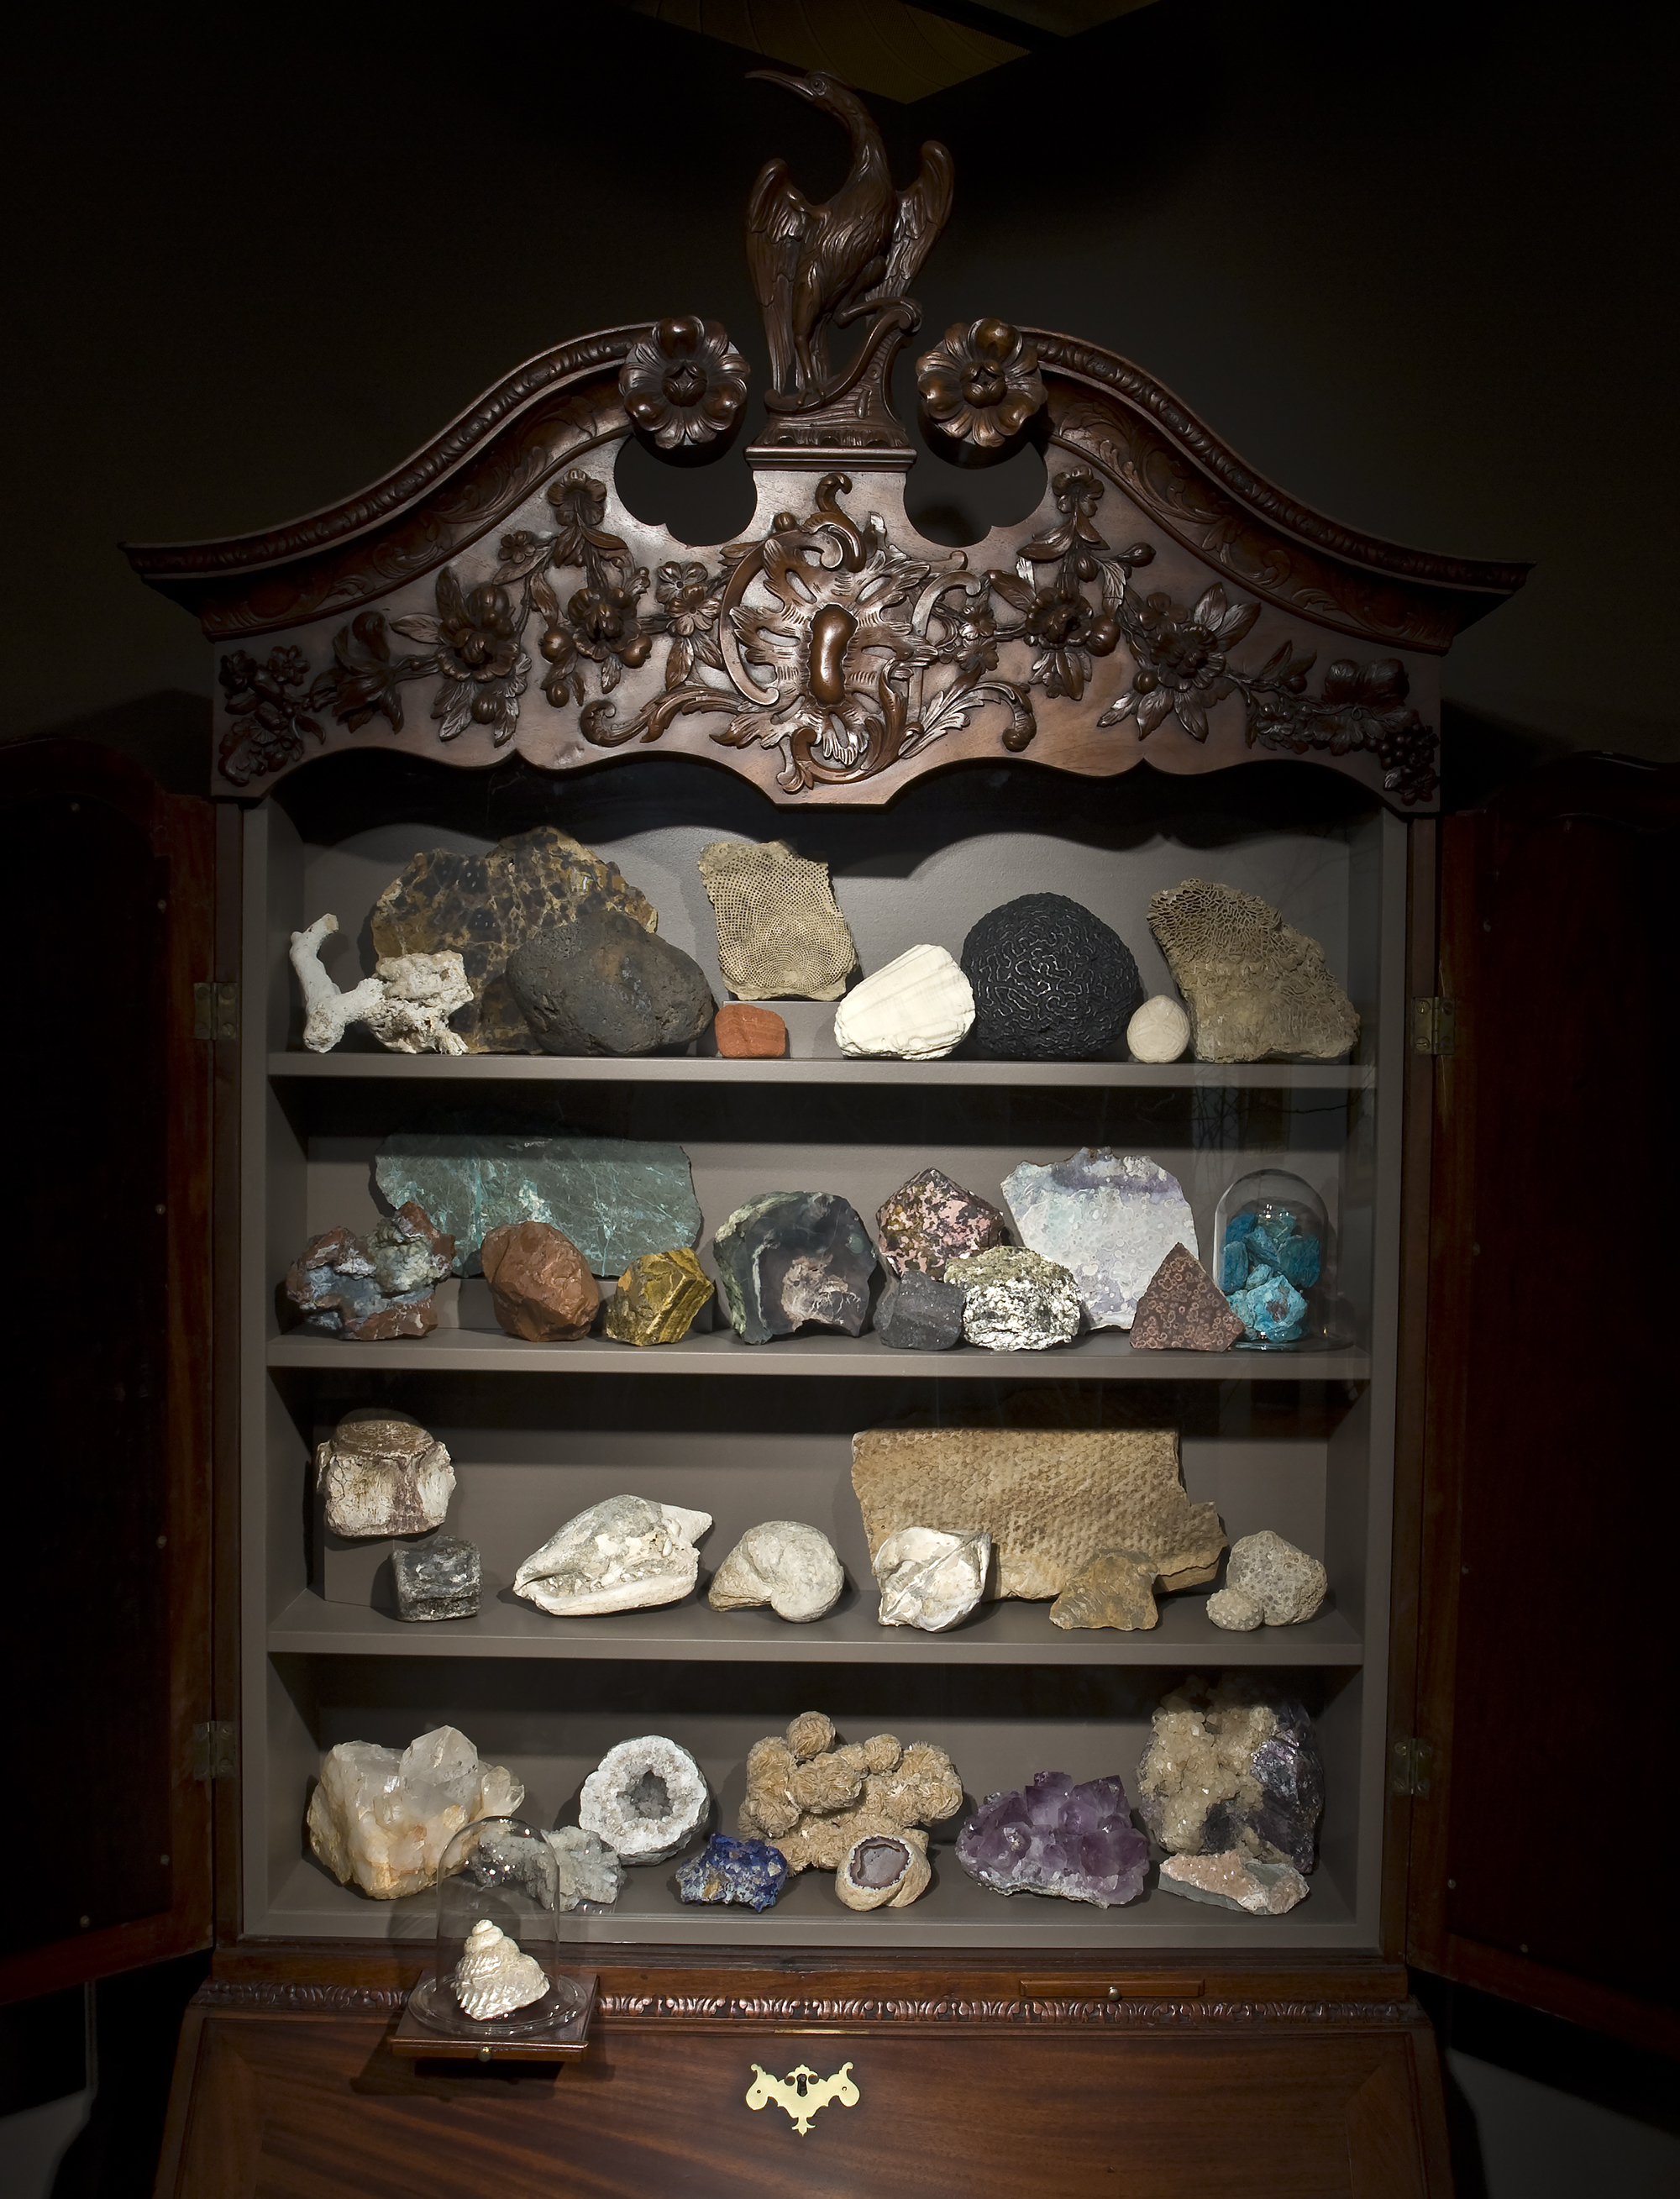 Loca Miraculi_room 1_ornate wood carving minerals shells